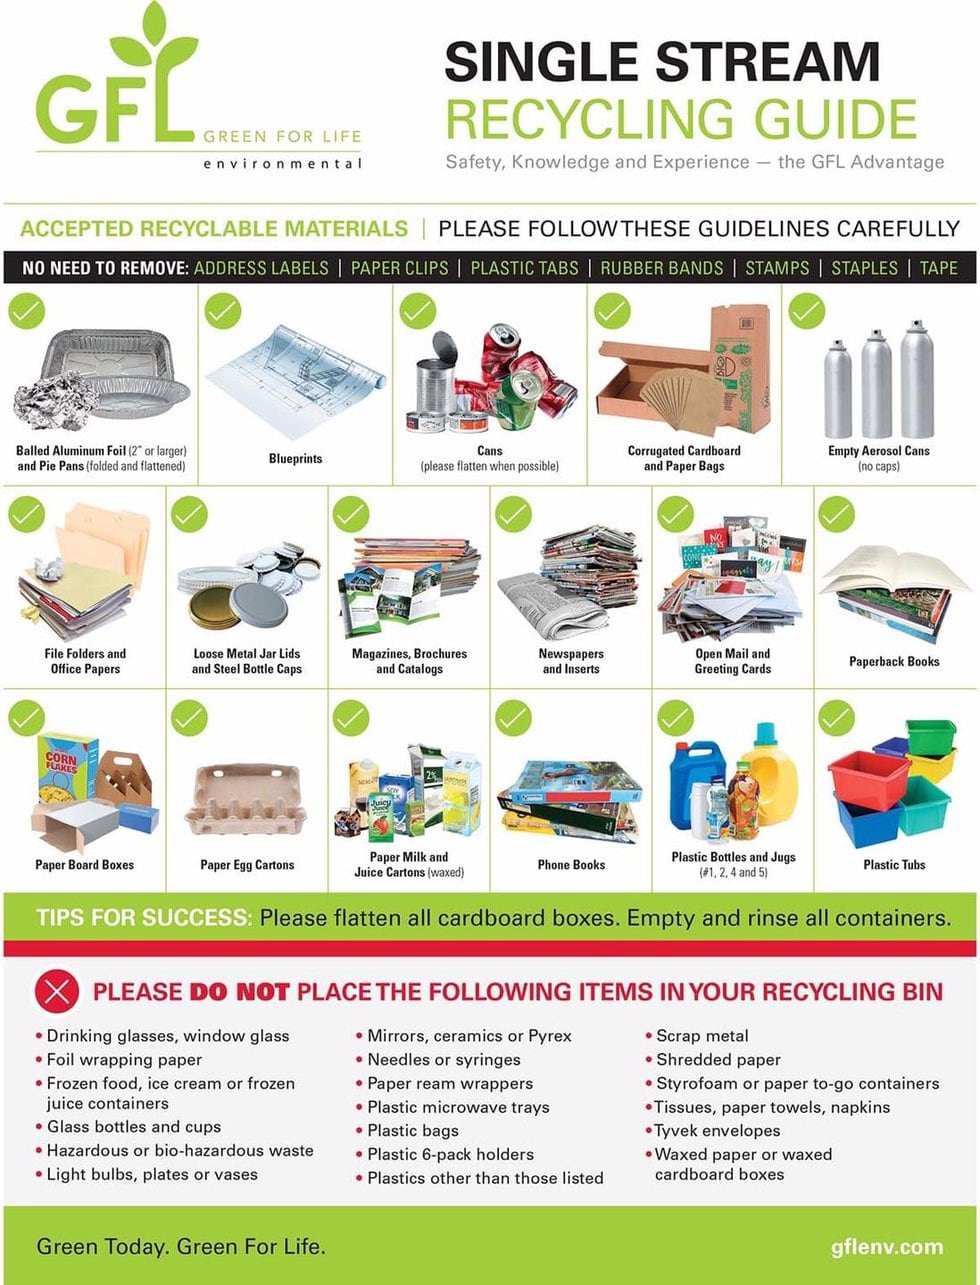 The GFL Environmental recycling guide.